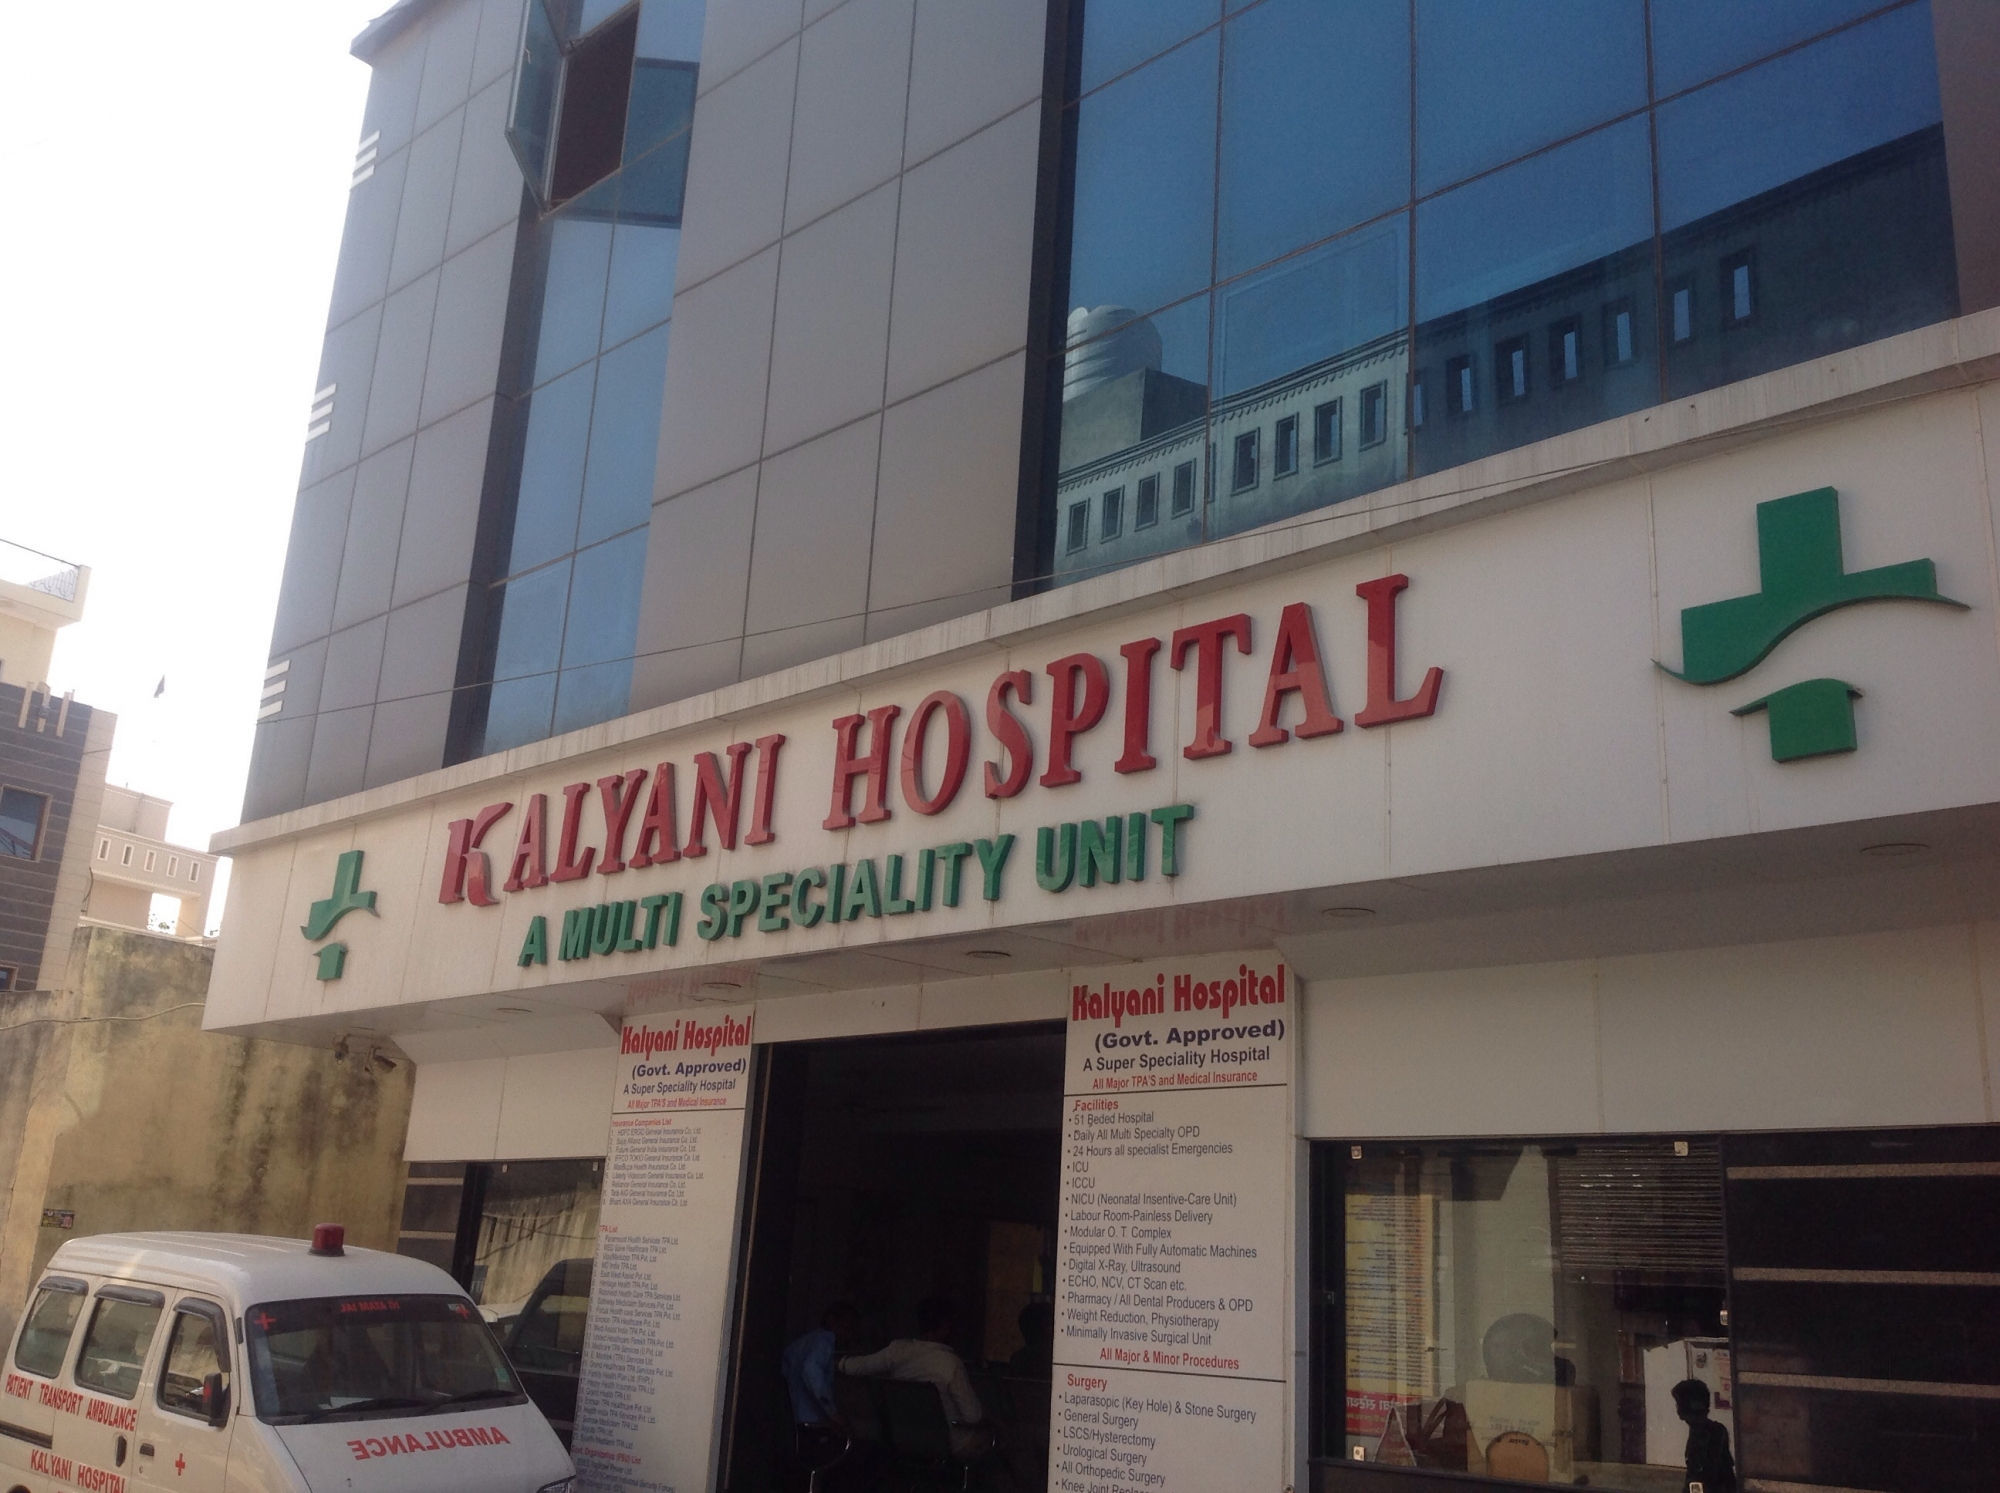 Kalyani Hospital|Hospitals|Medical Services